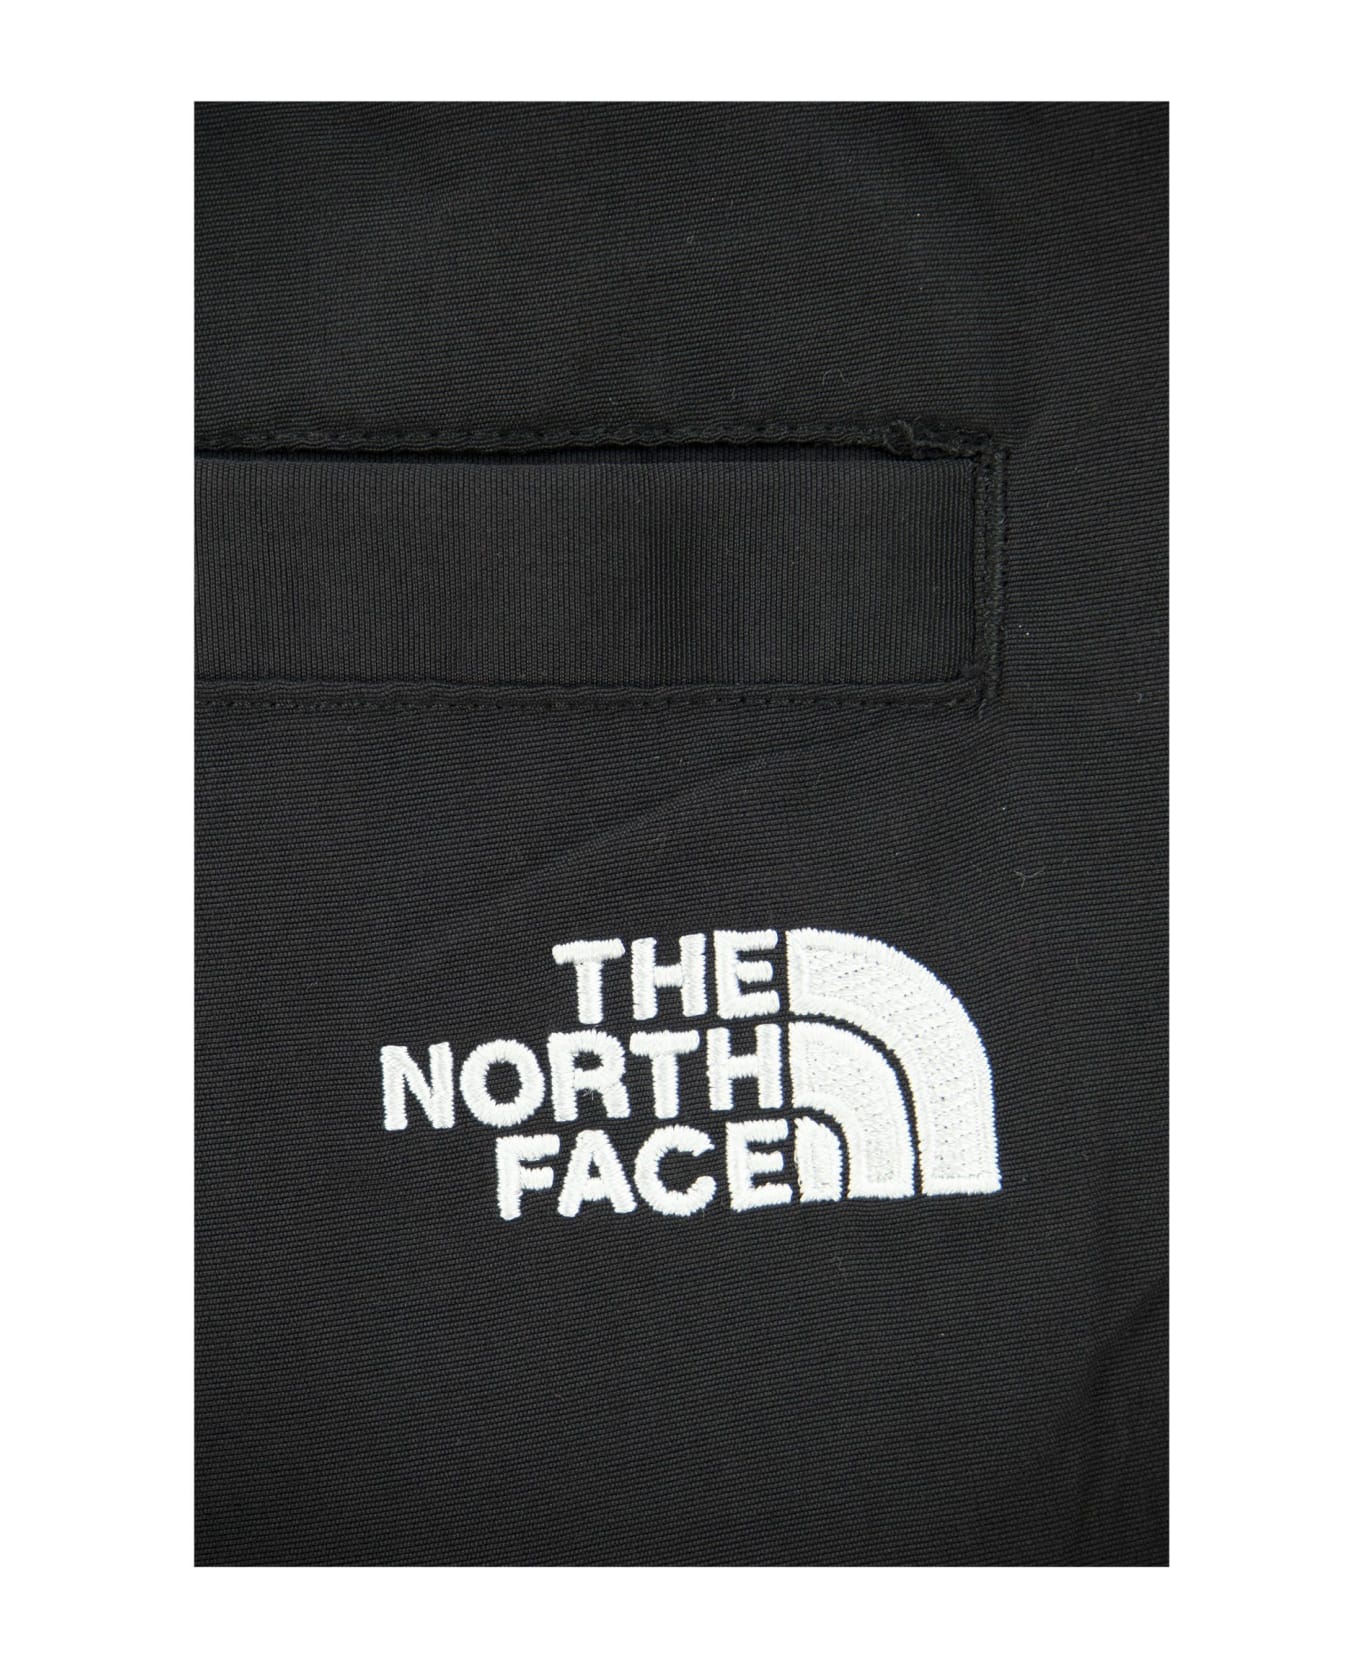 The North Face Men's Short Shorts - Black